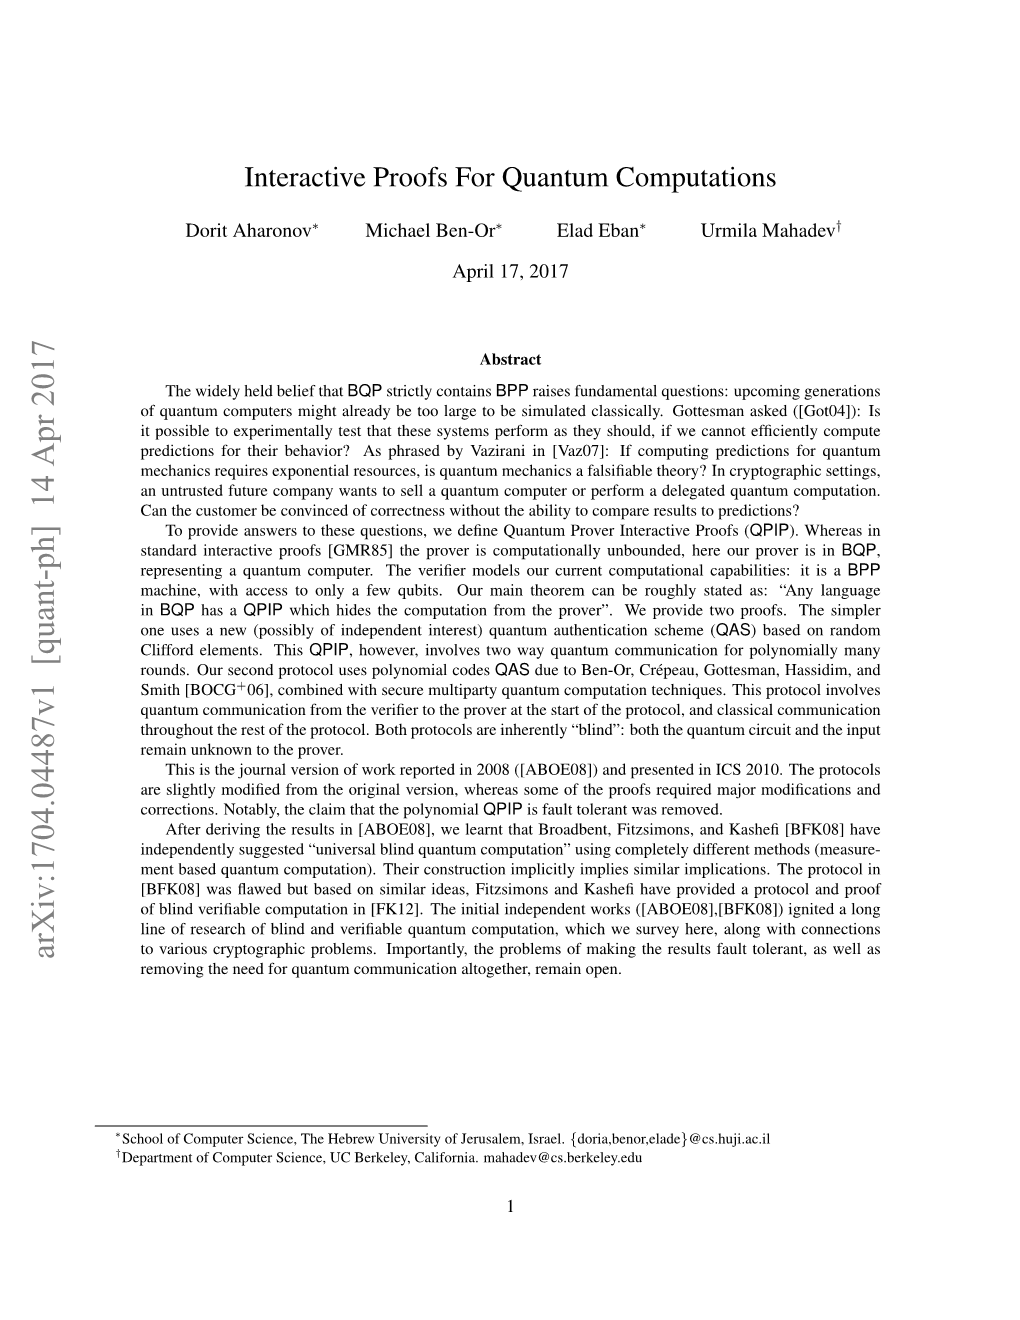 Interactive Proofs for Quantum Computations